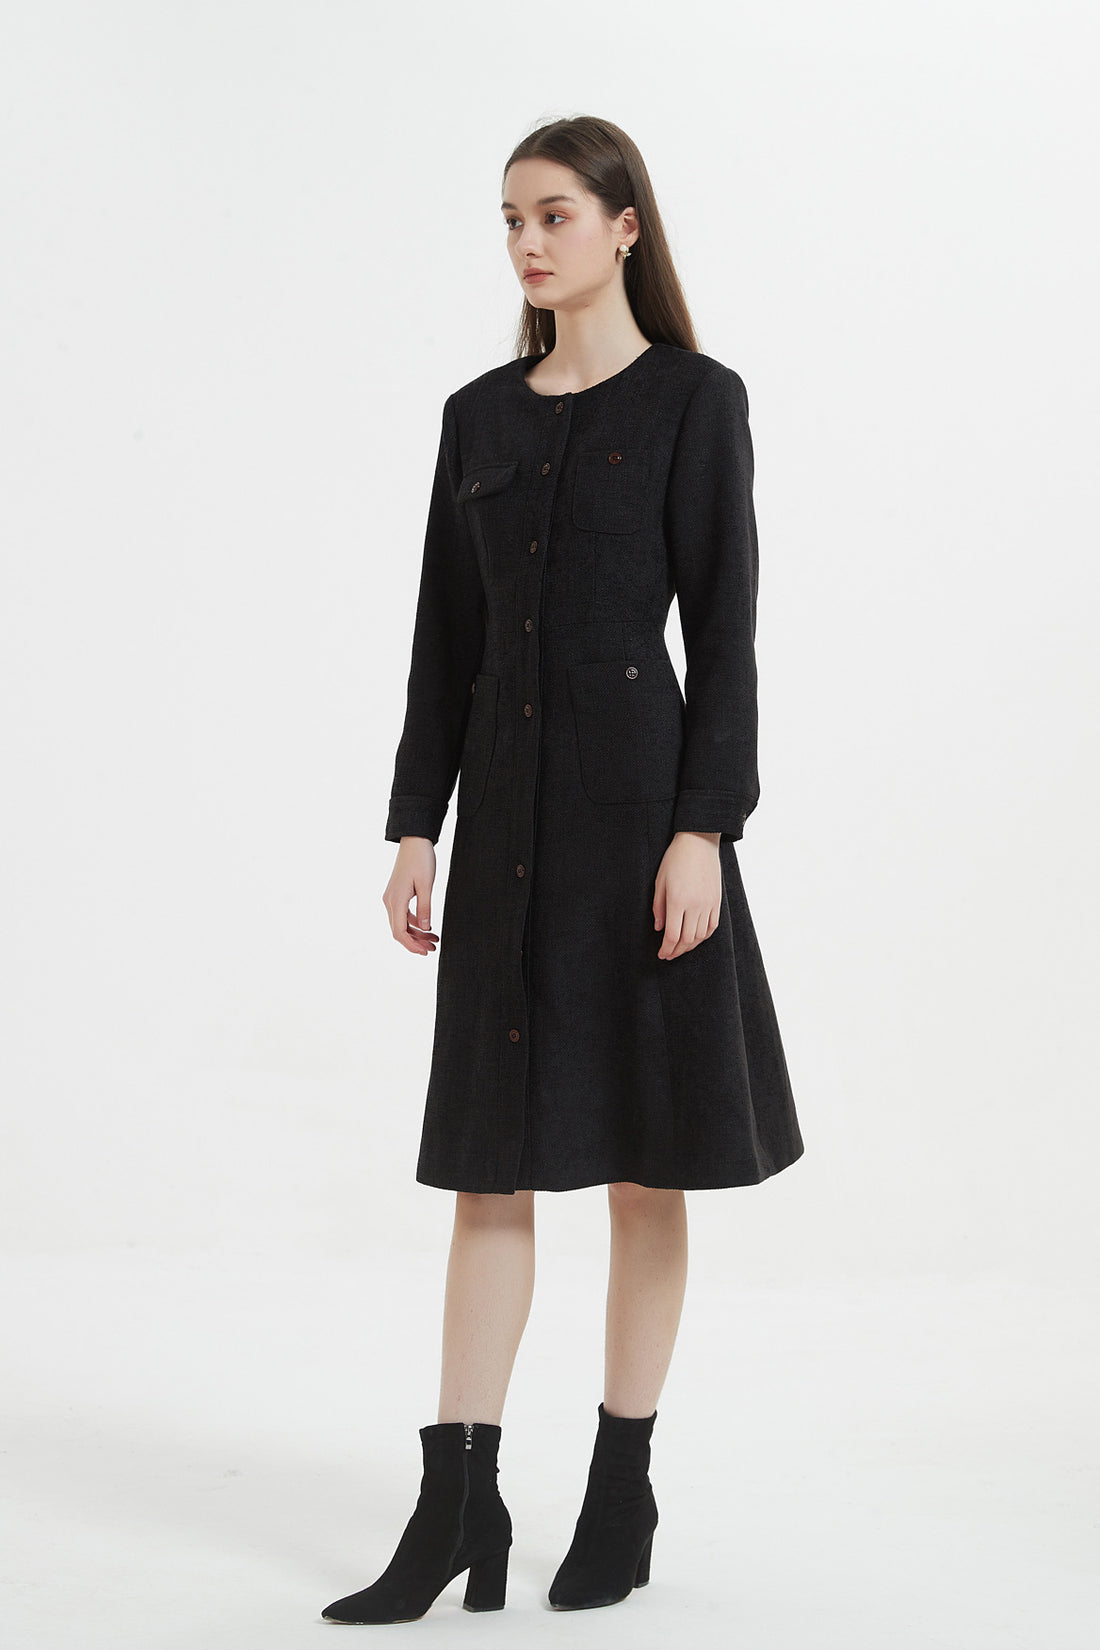 SKYE Shop Chic Modern Elegant Timeless Women Clothing French Parisian Minimalist Emilia Dress black 2